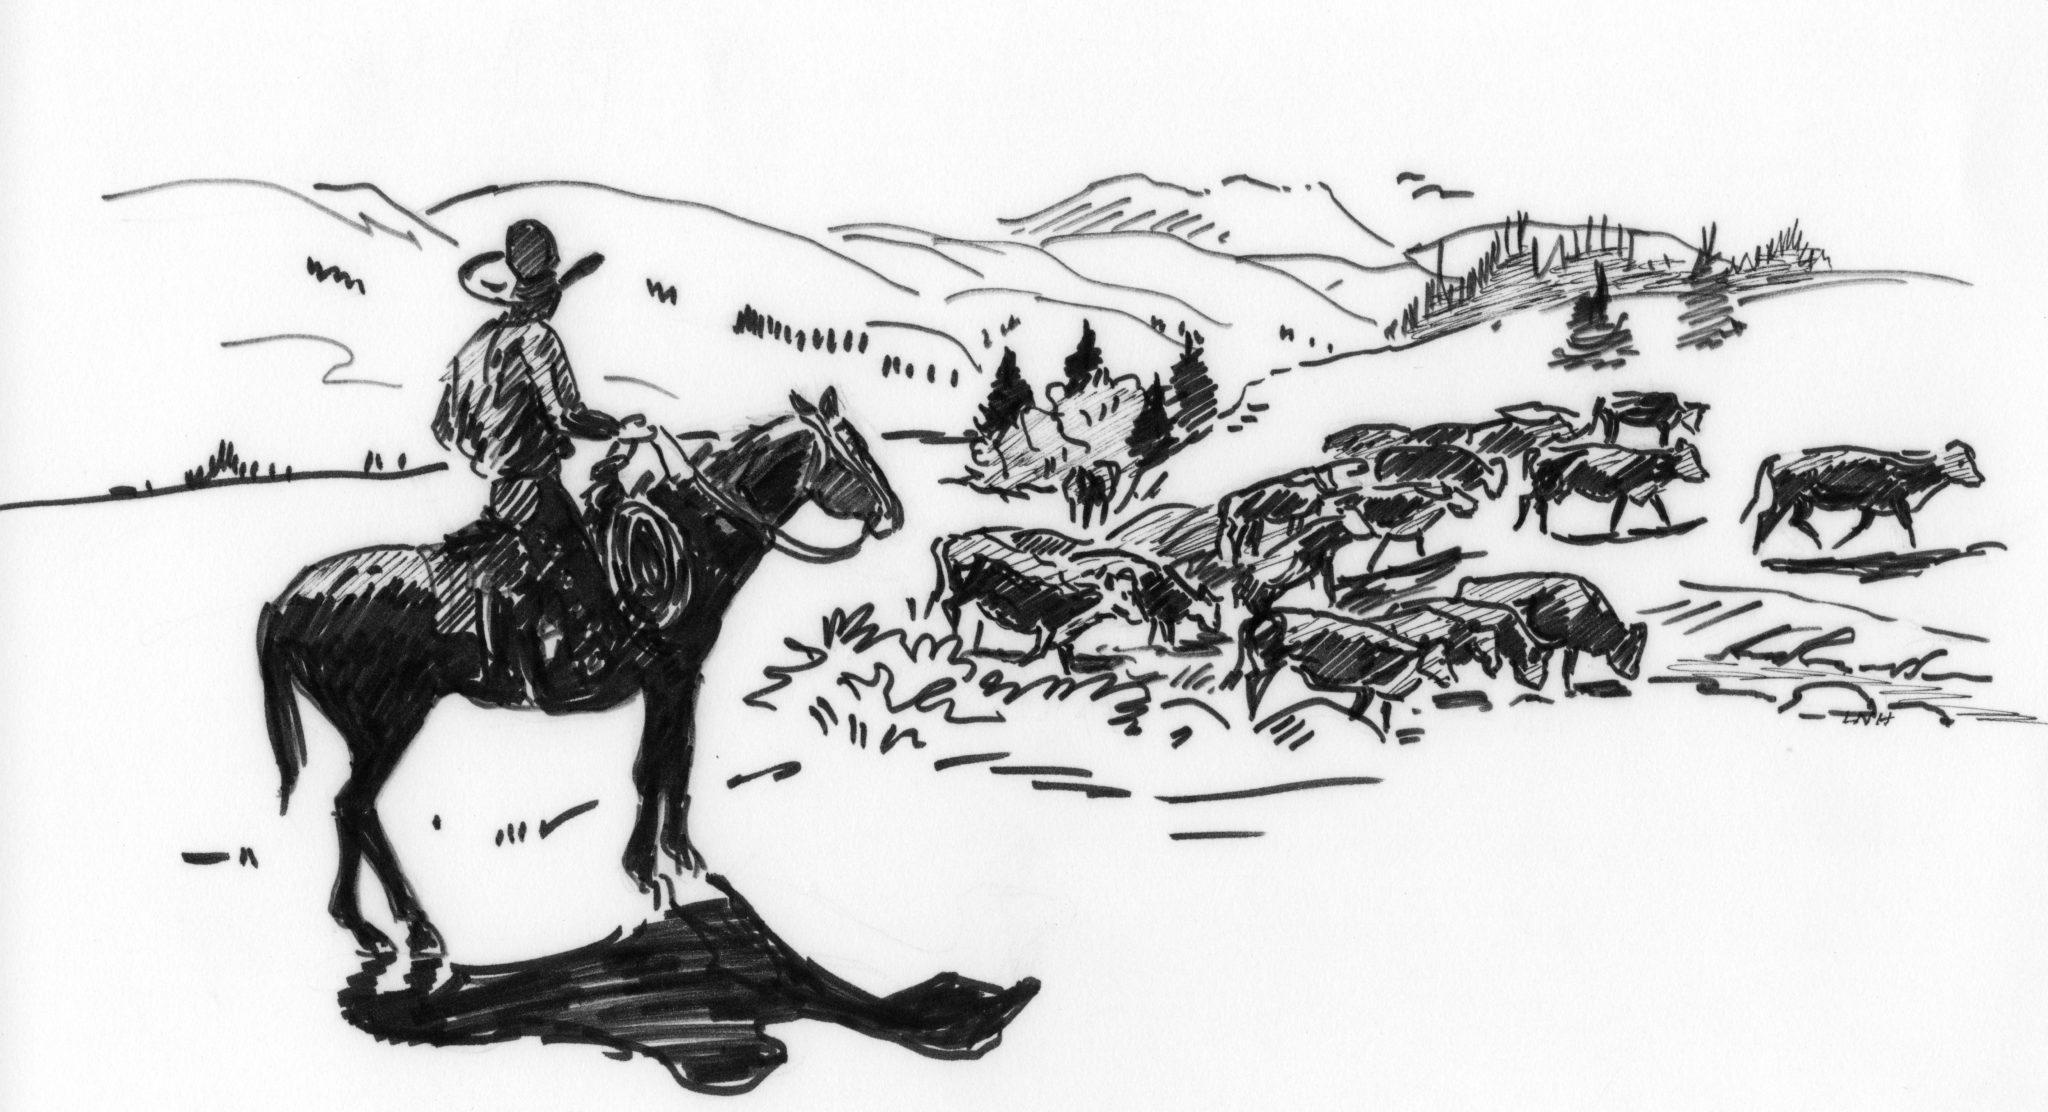 Historical drawing of cowboy